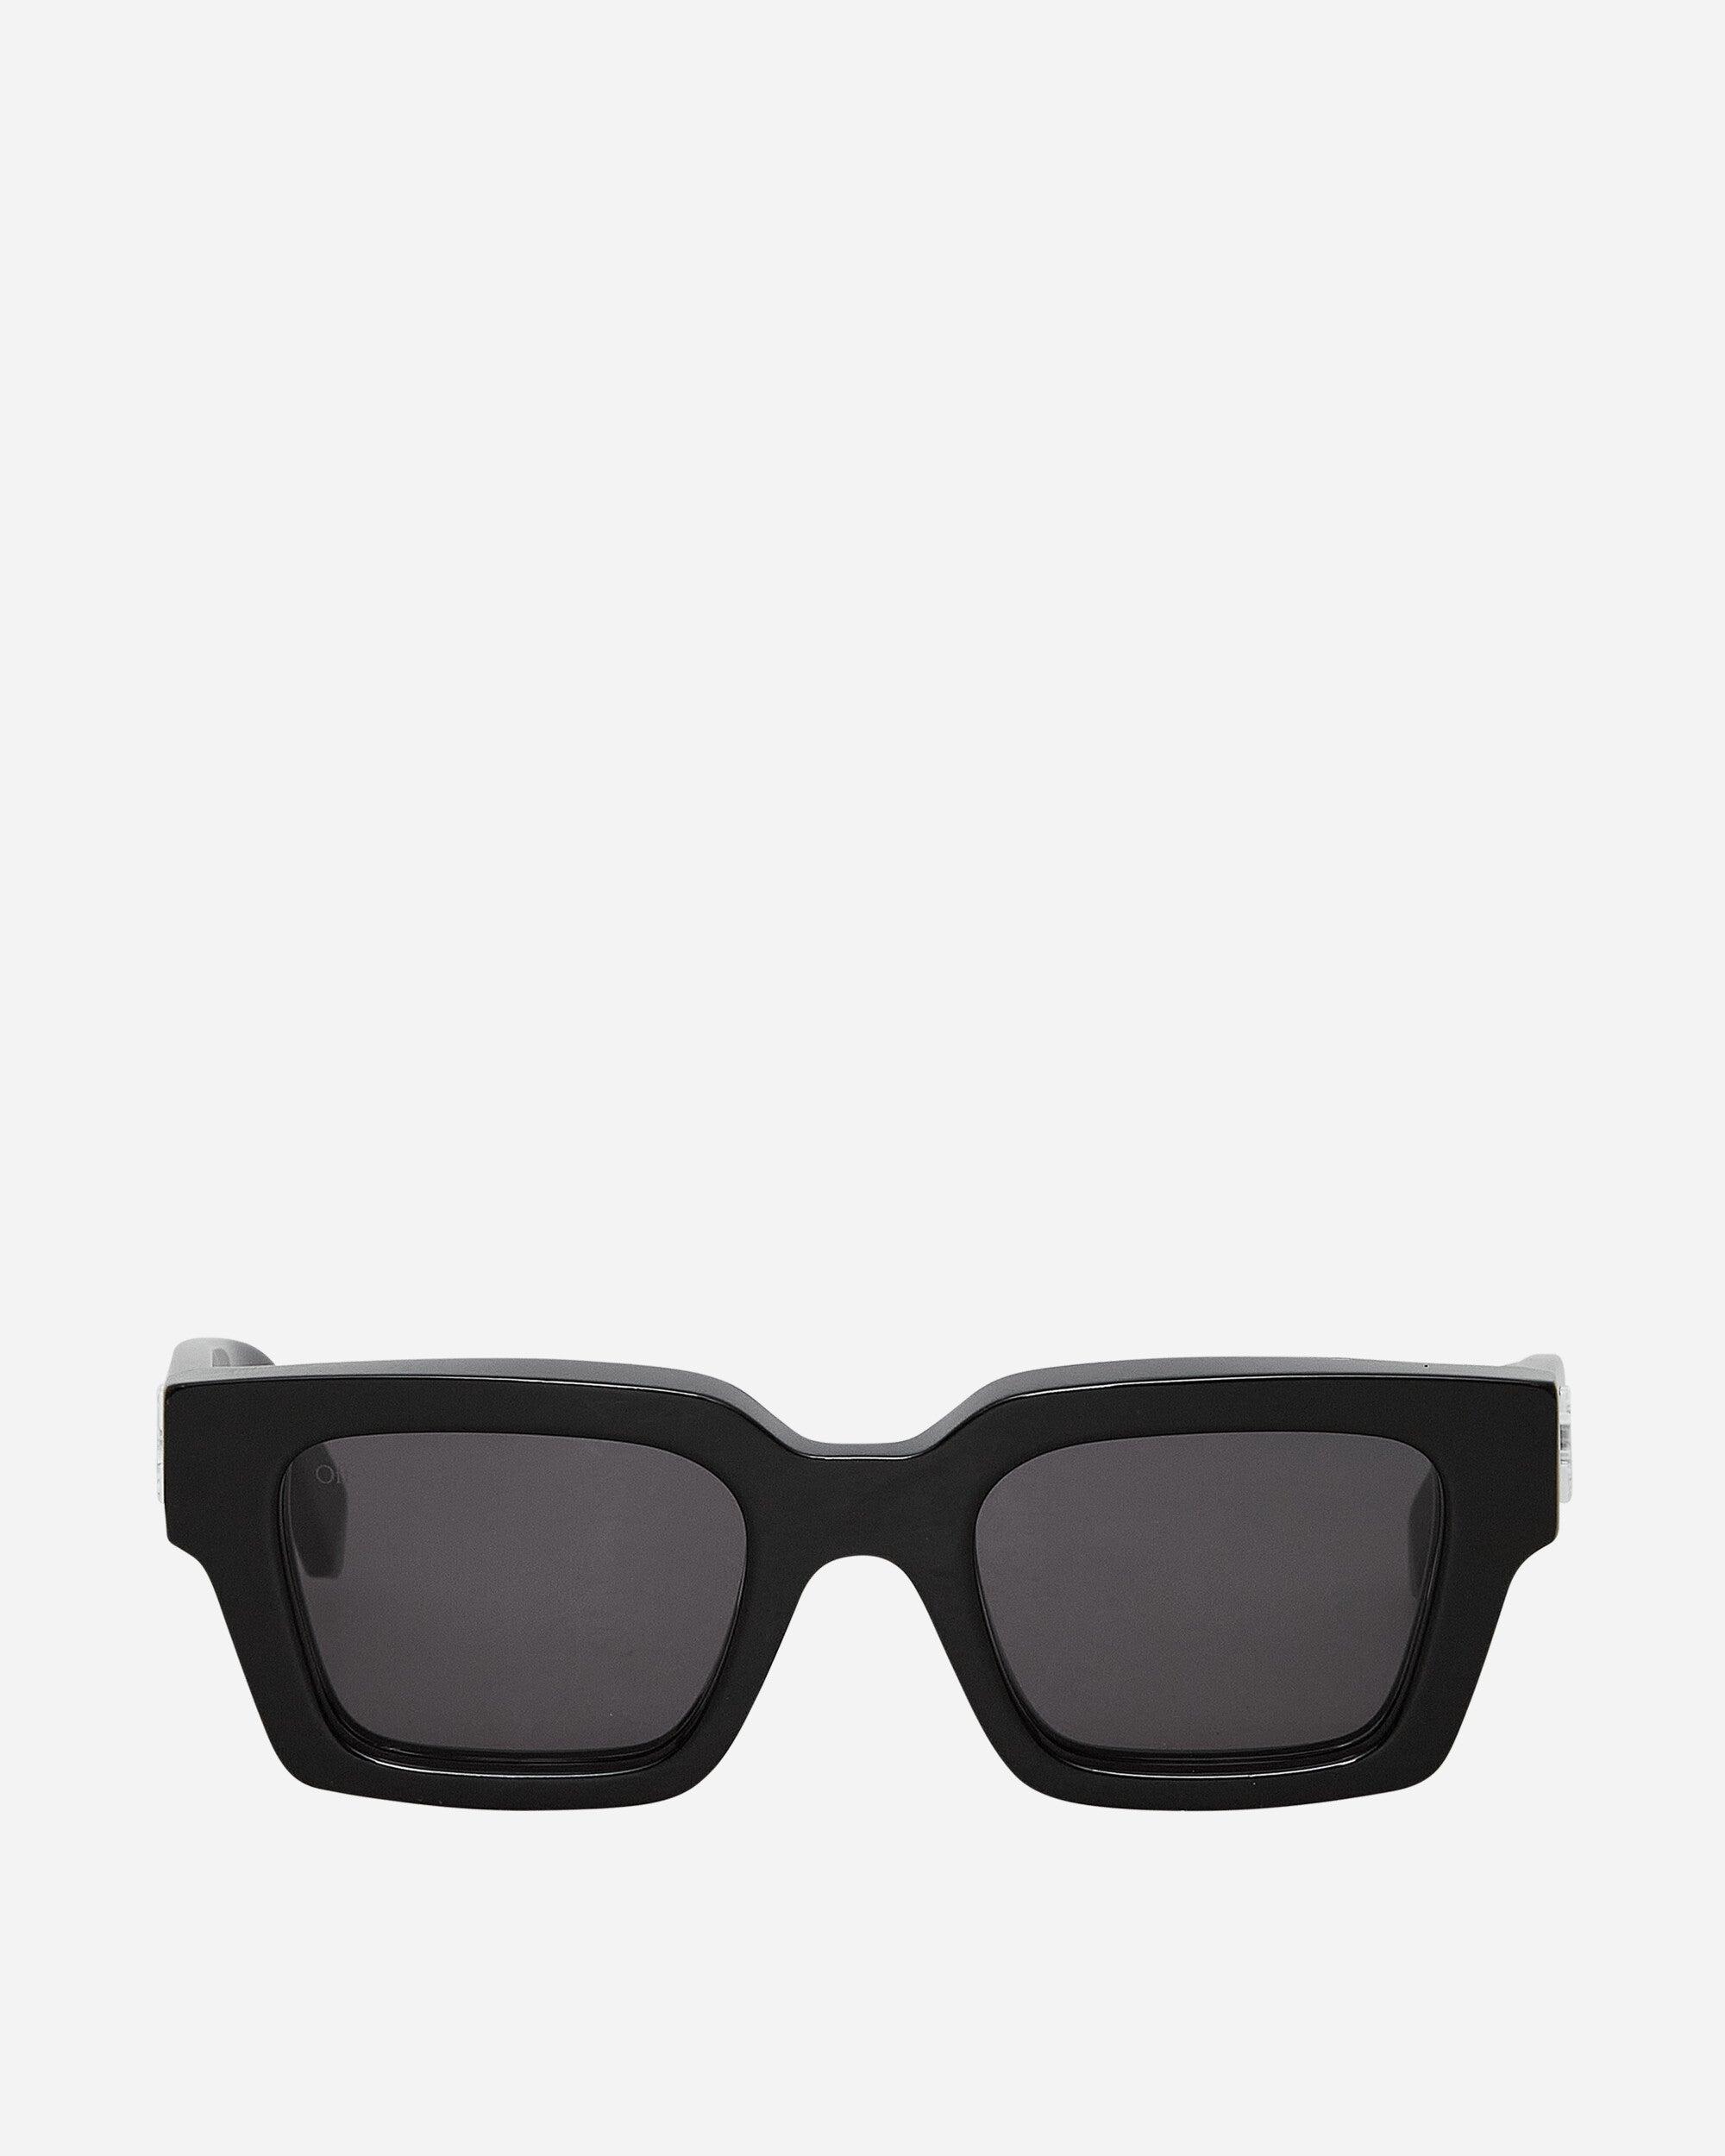 Off-White c/o Virgil Abloh Virgil Sunglasses / Dark Grey in Black